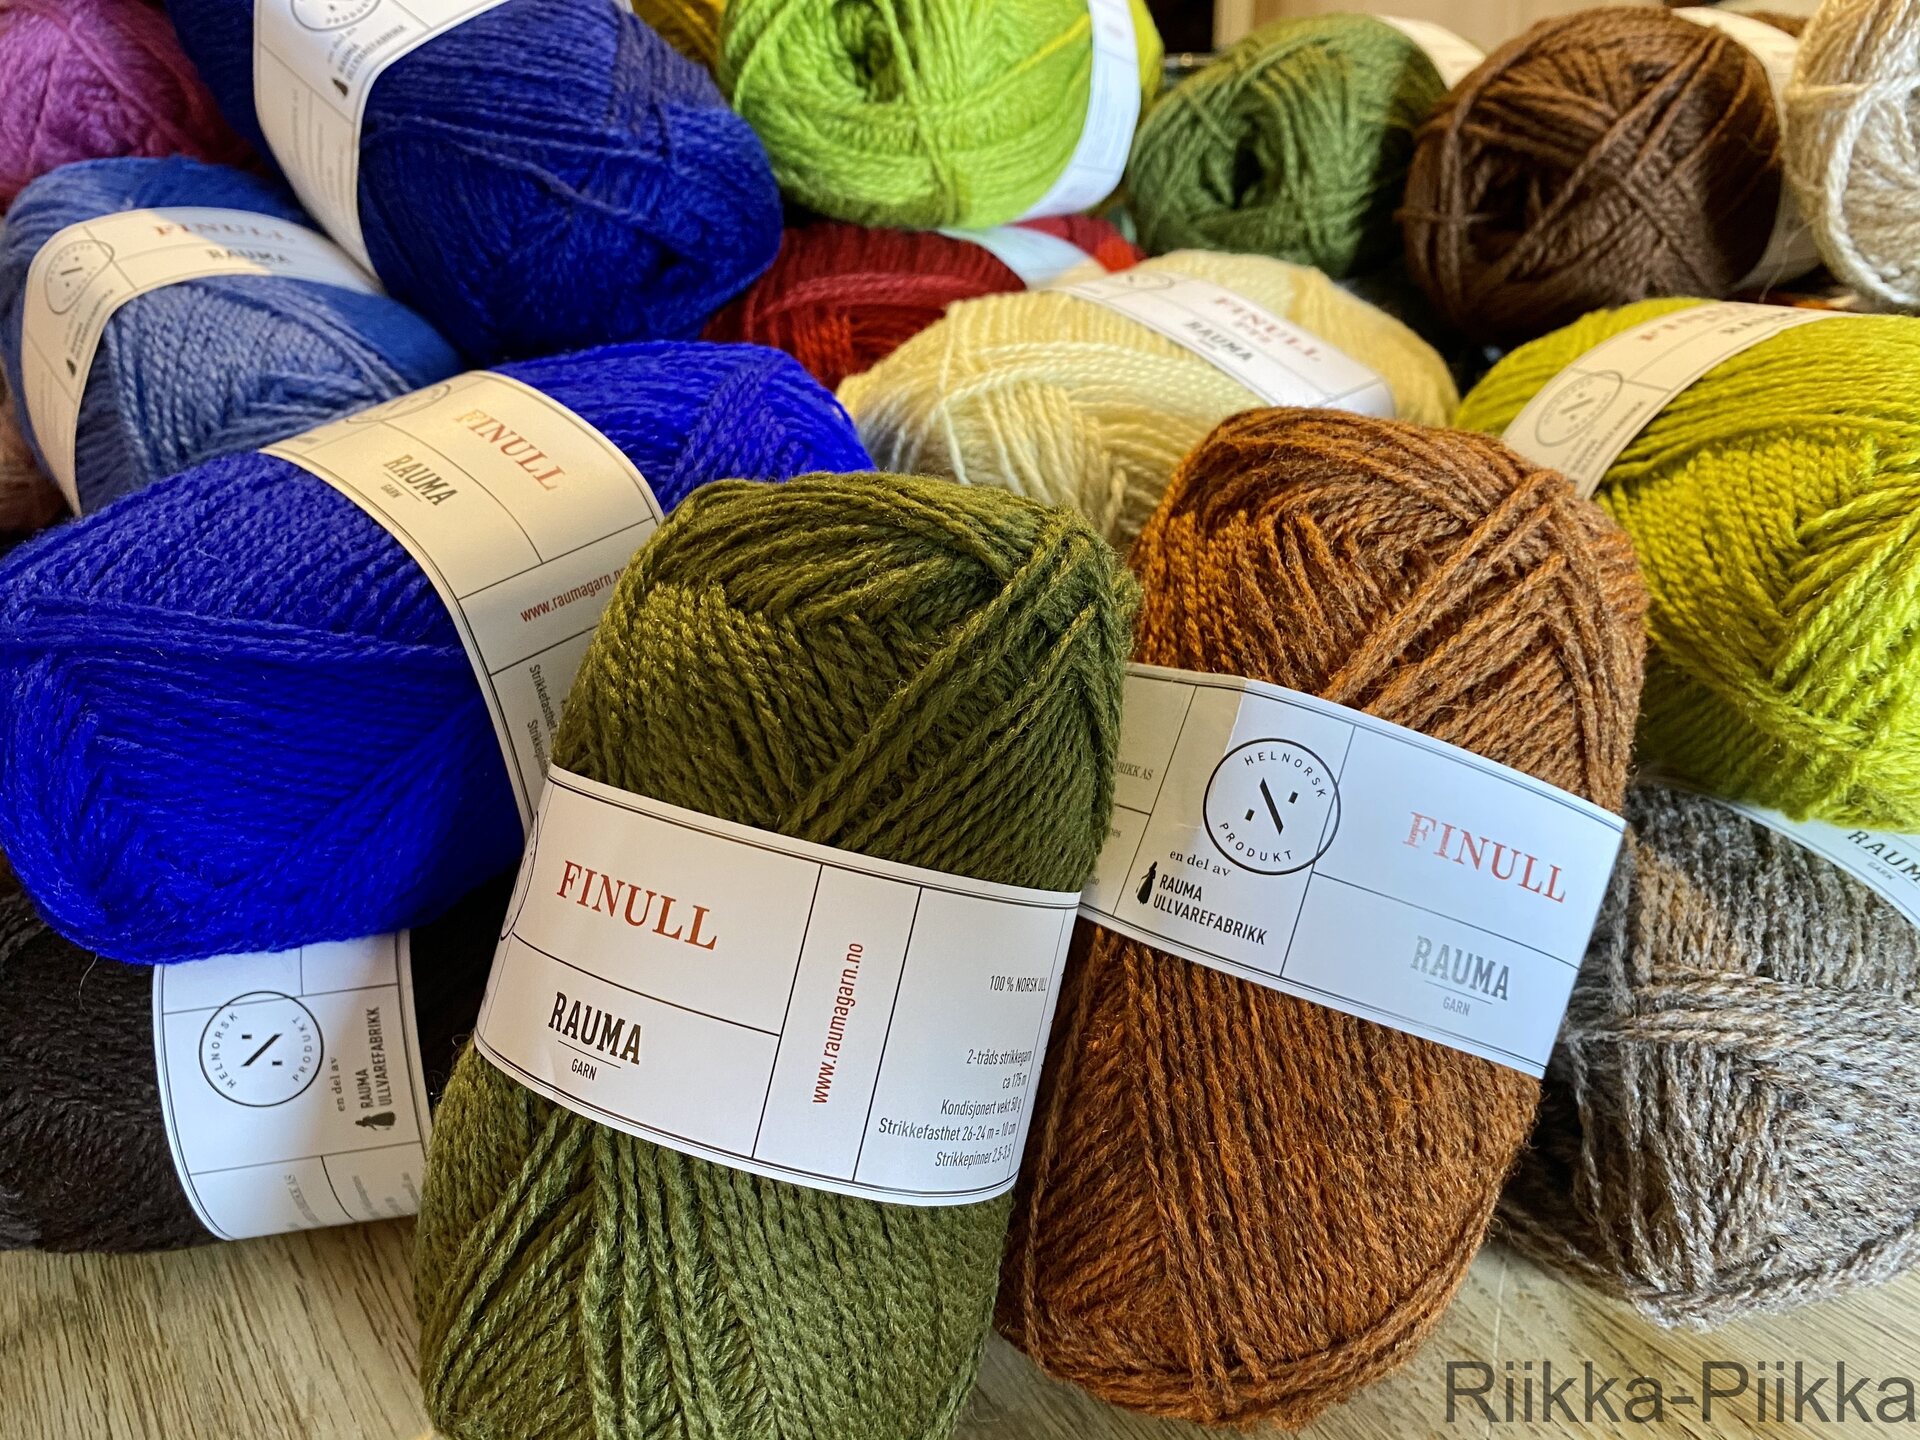 Rauma Garn Finull Wool Yarns | Riikka-Piikka English